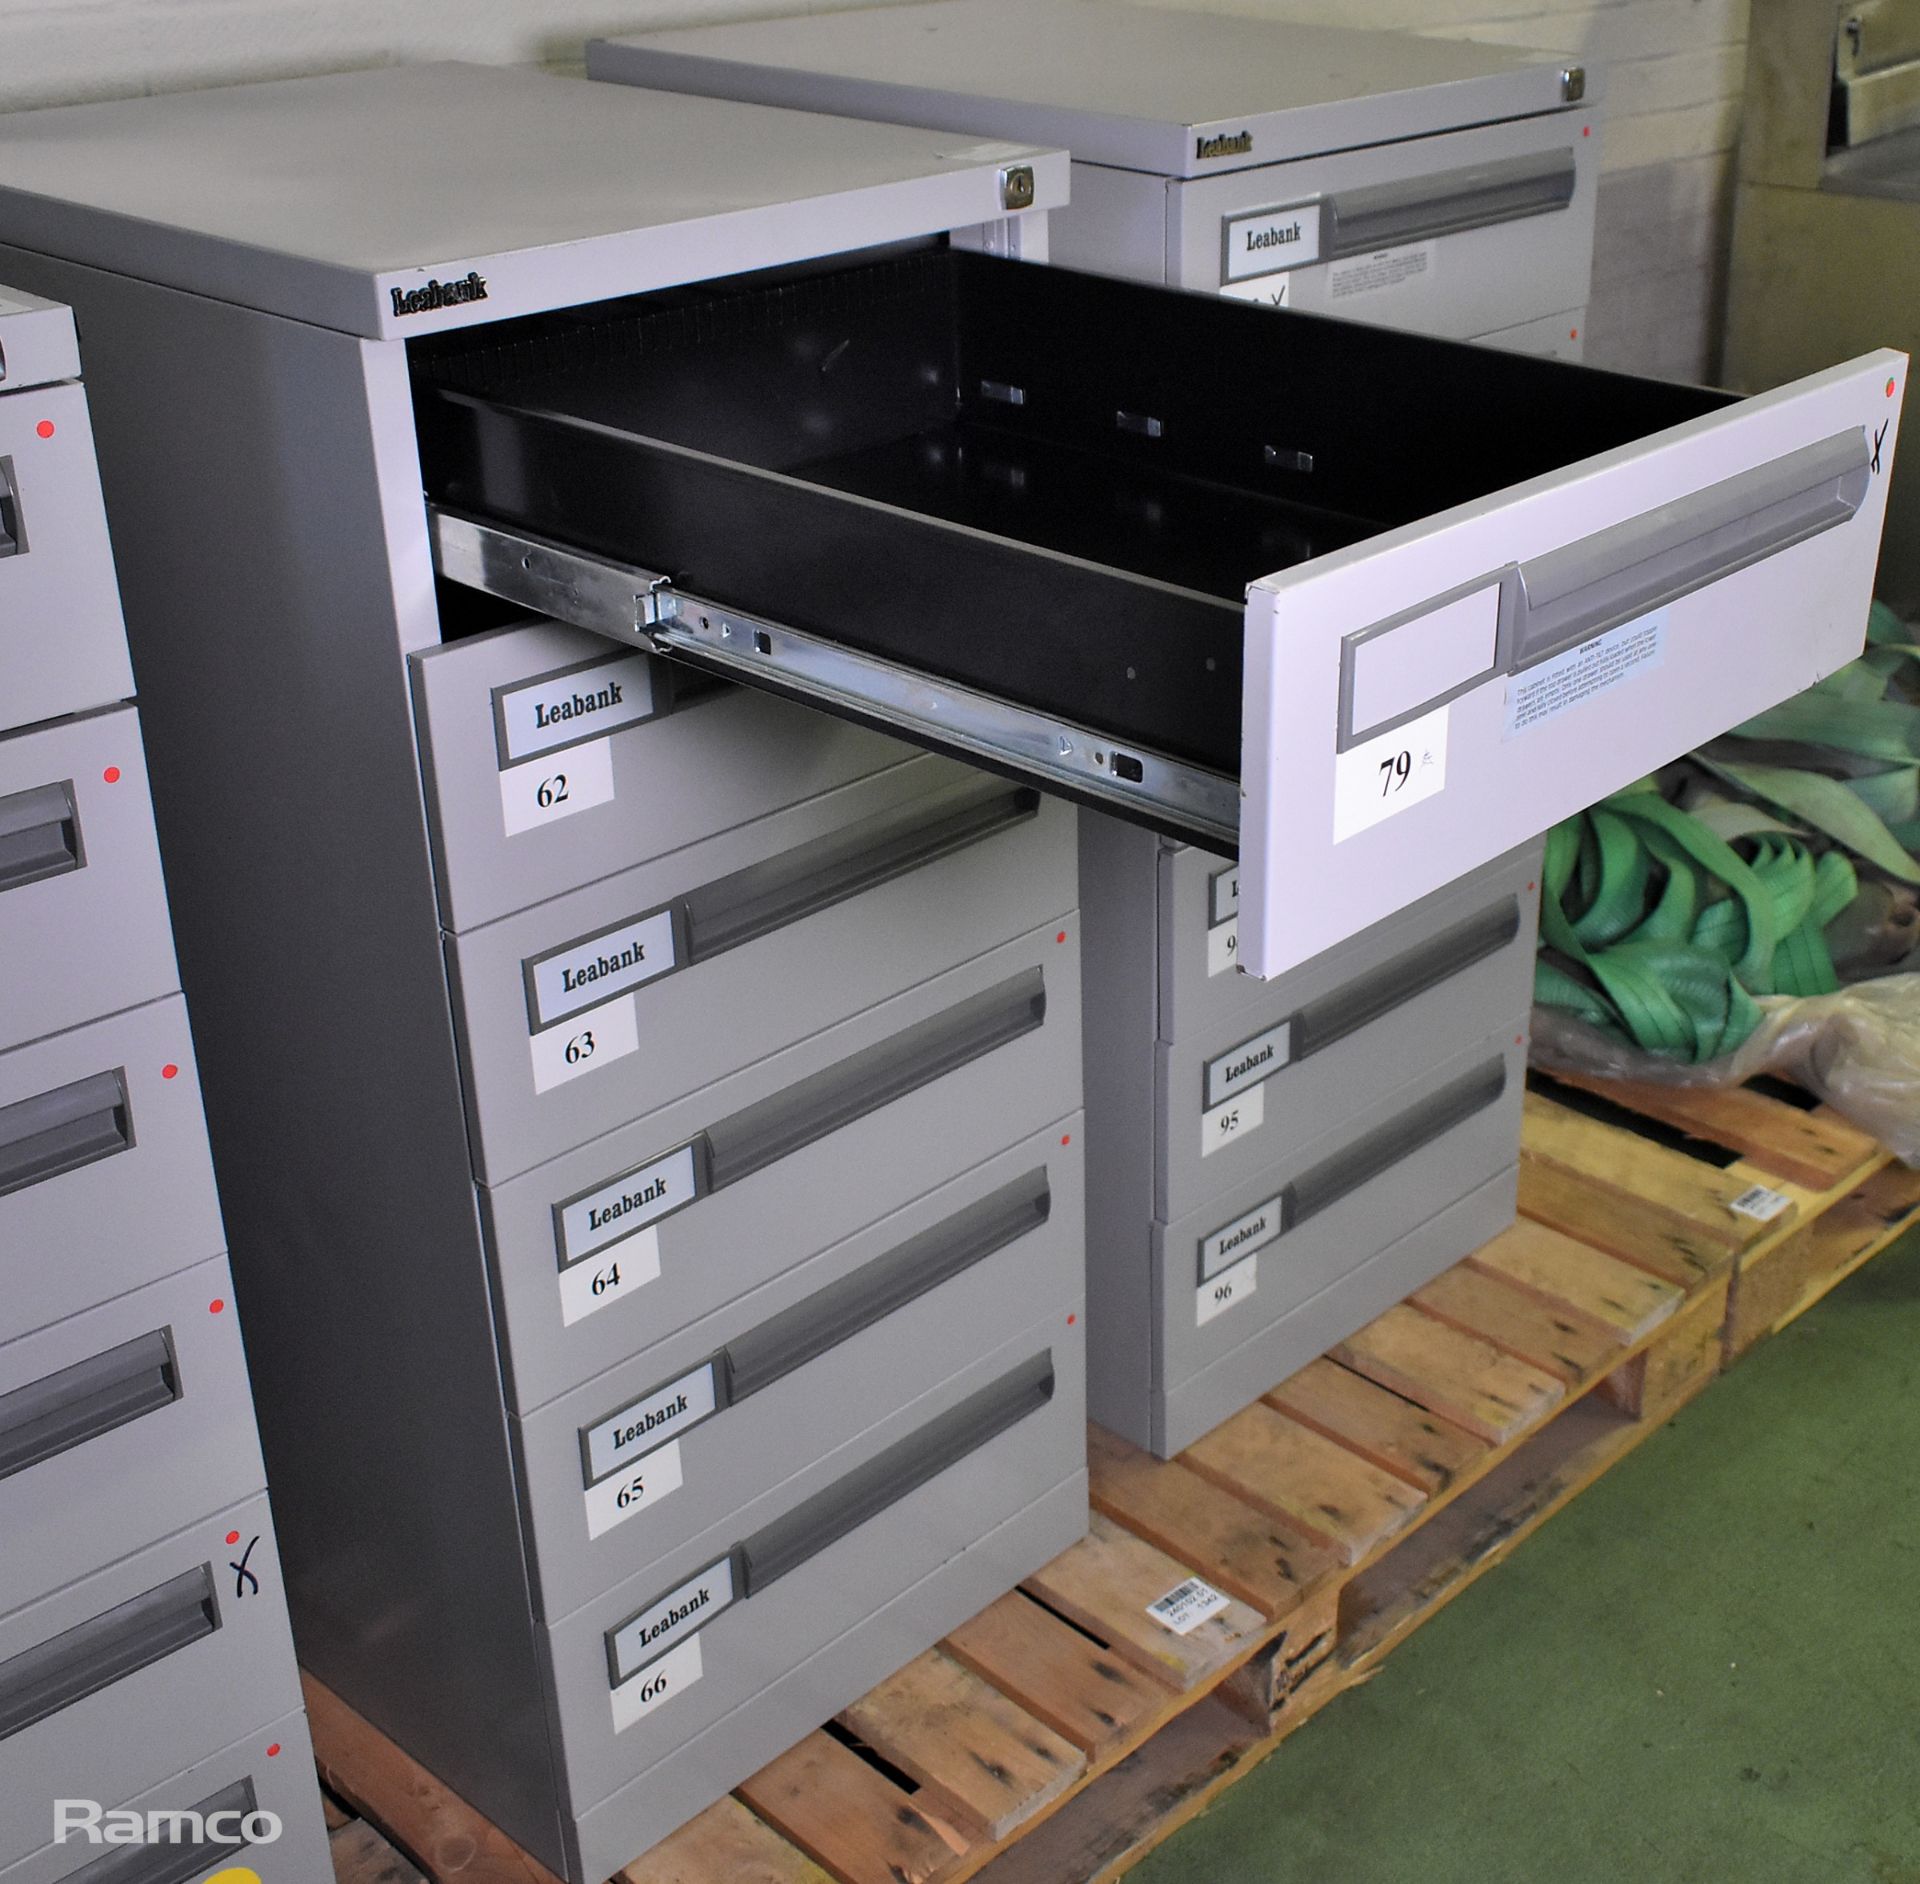 2x Leabank 6 drawer filing cabinets - W 470 x D 630 x H 1020mm - NO KEYS - Bild 5 aus 6